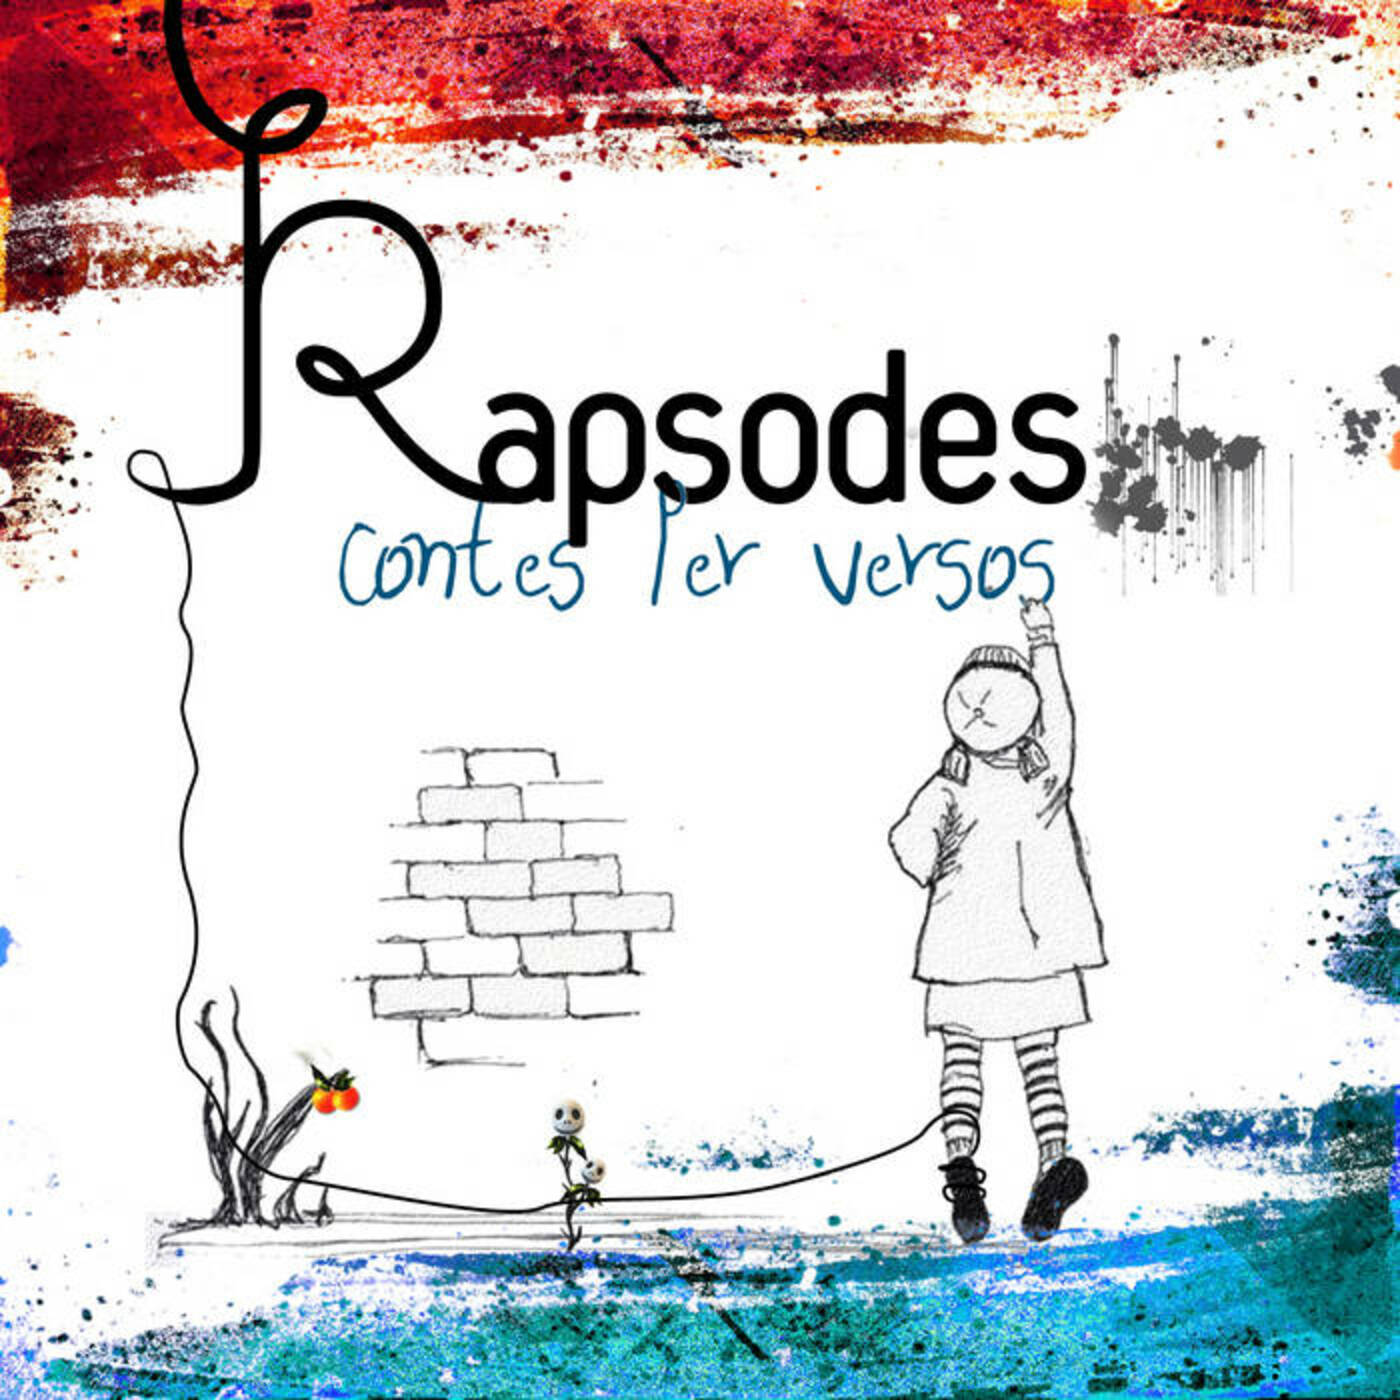 Rapsodes - Contes per versos | musica en valencià